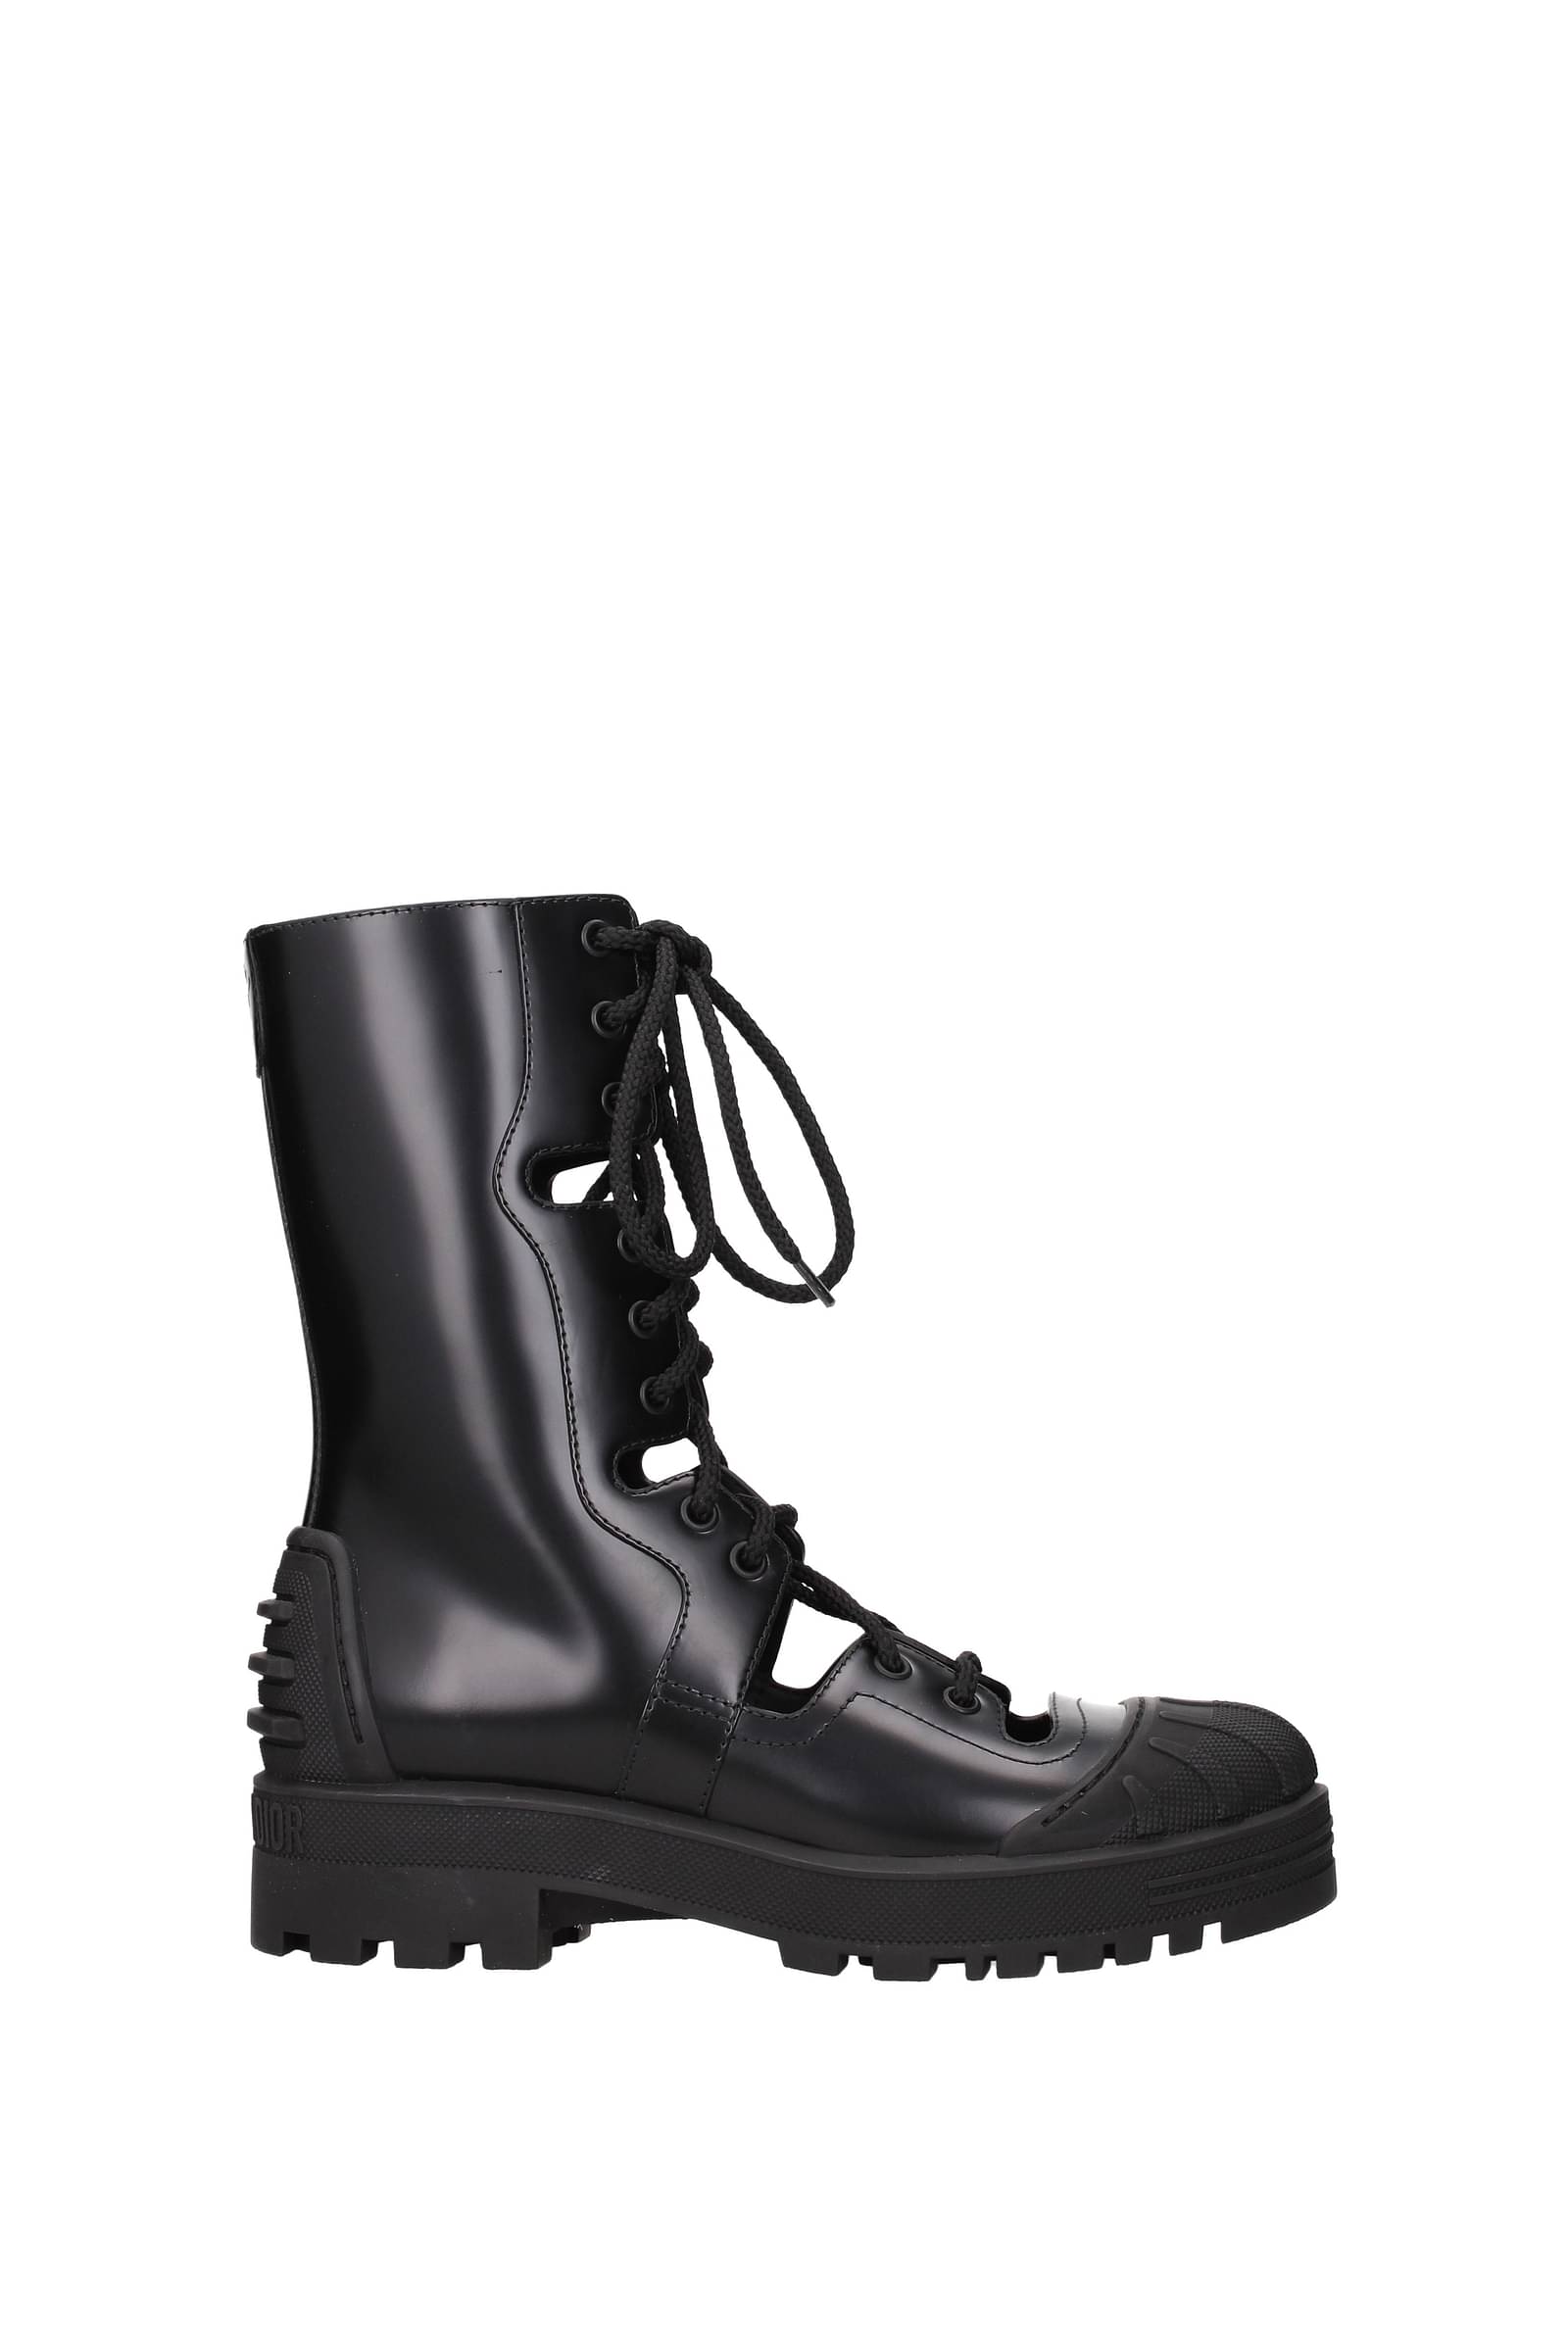 Fashion Dior Christian Dior Black leather ankle boots sz 39UK 6 fysolinevn